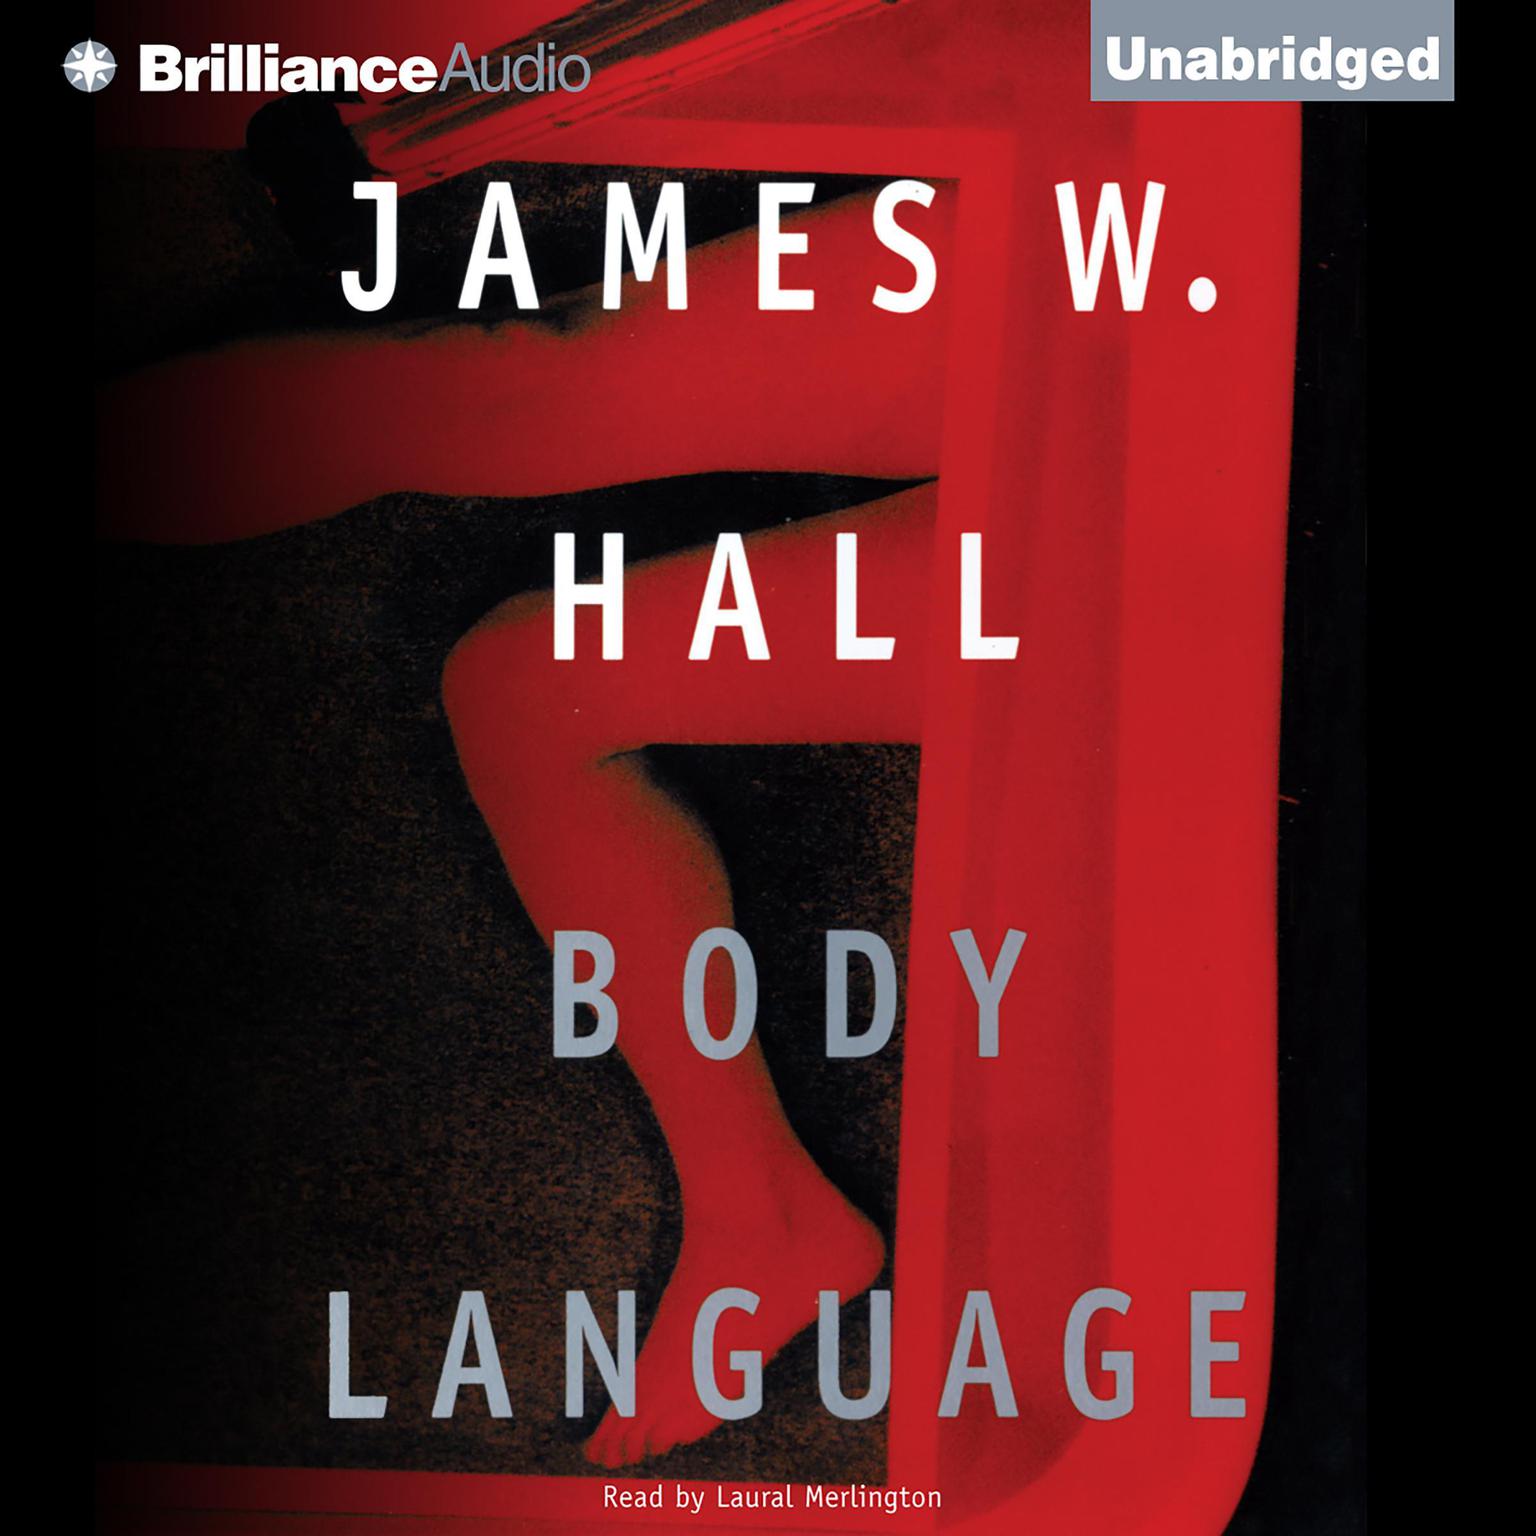 Body Language Audiobook, by James W. Hall